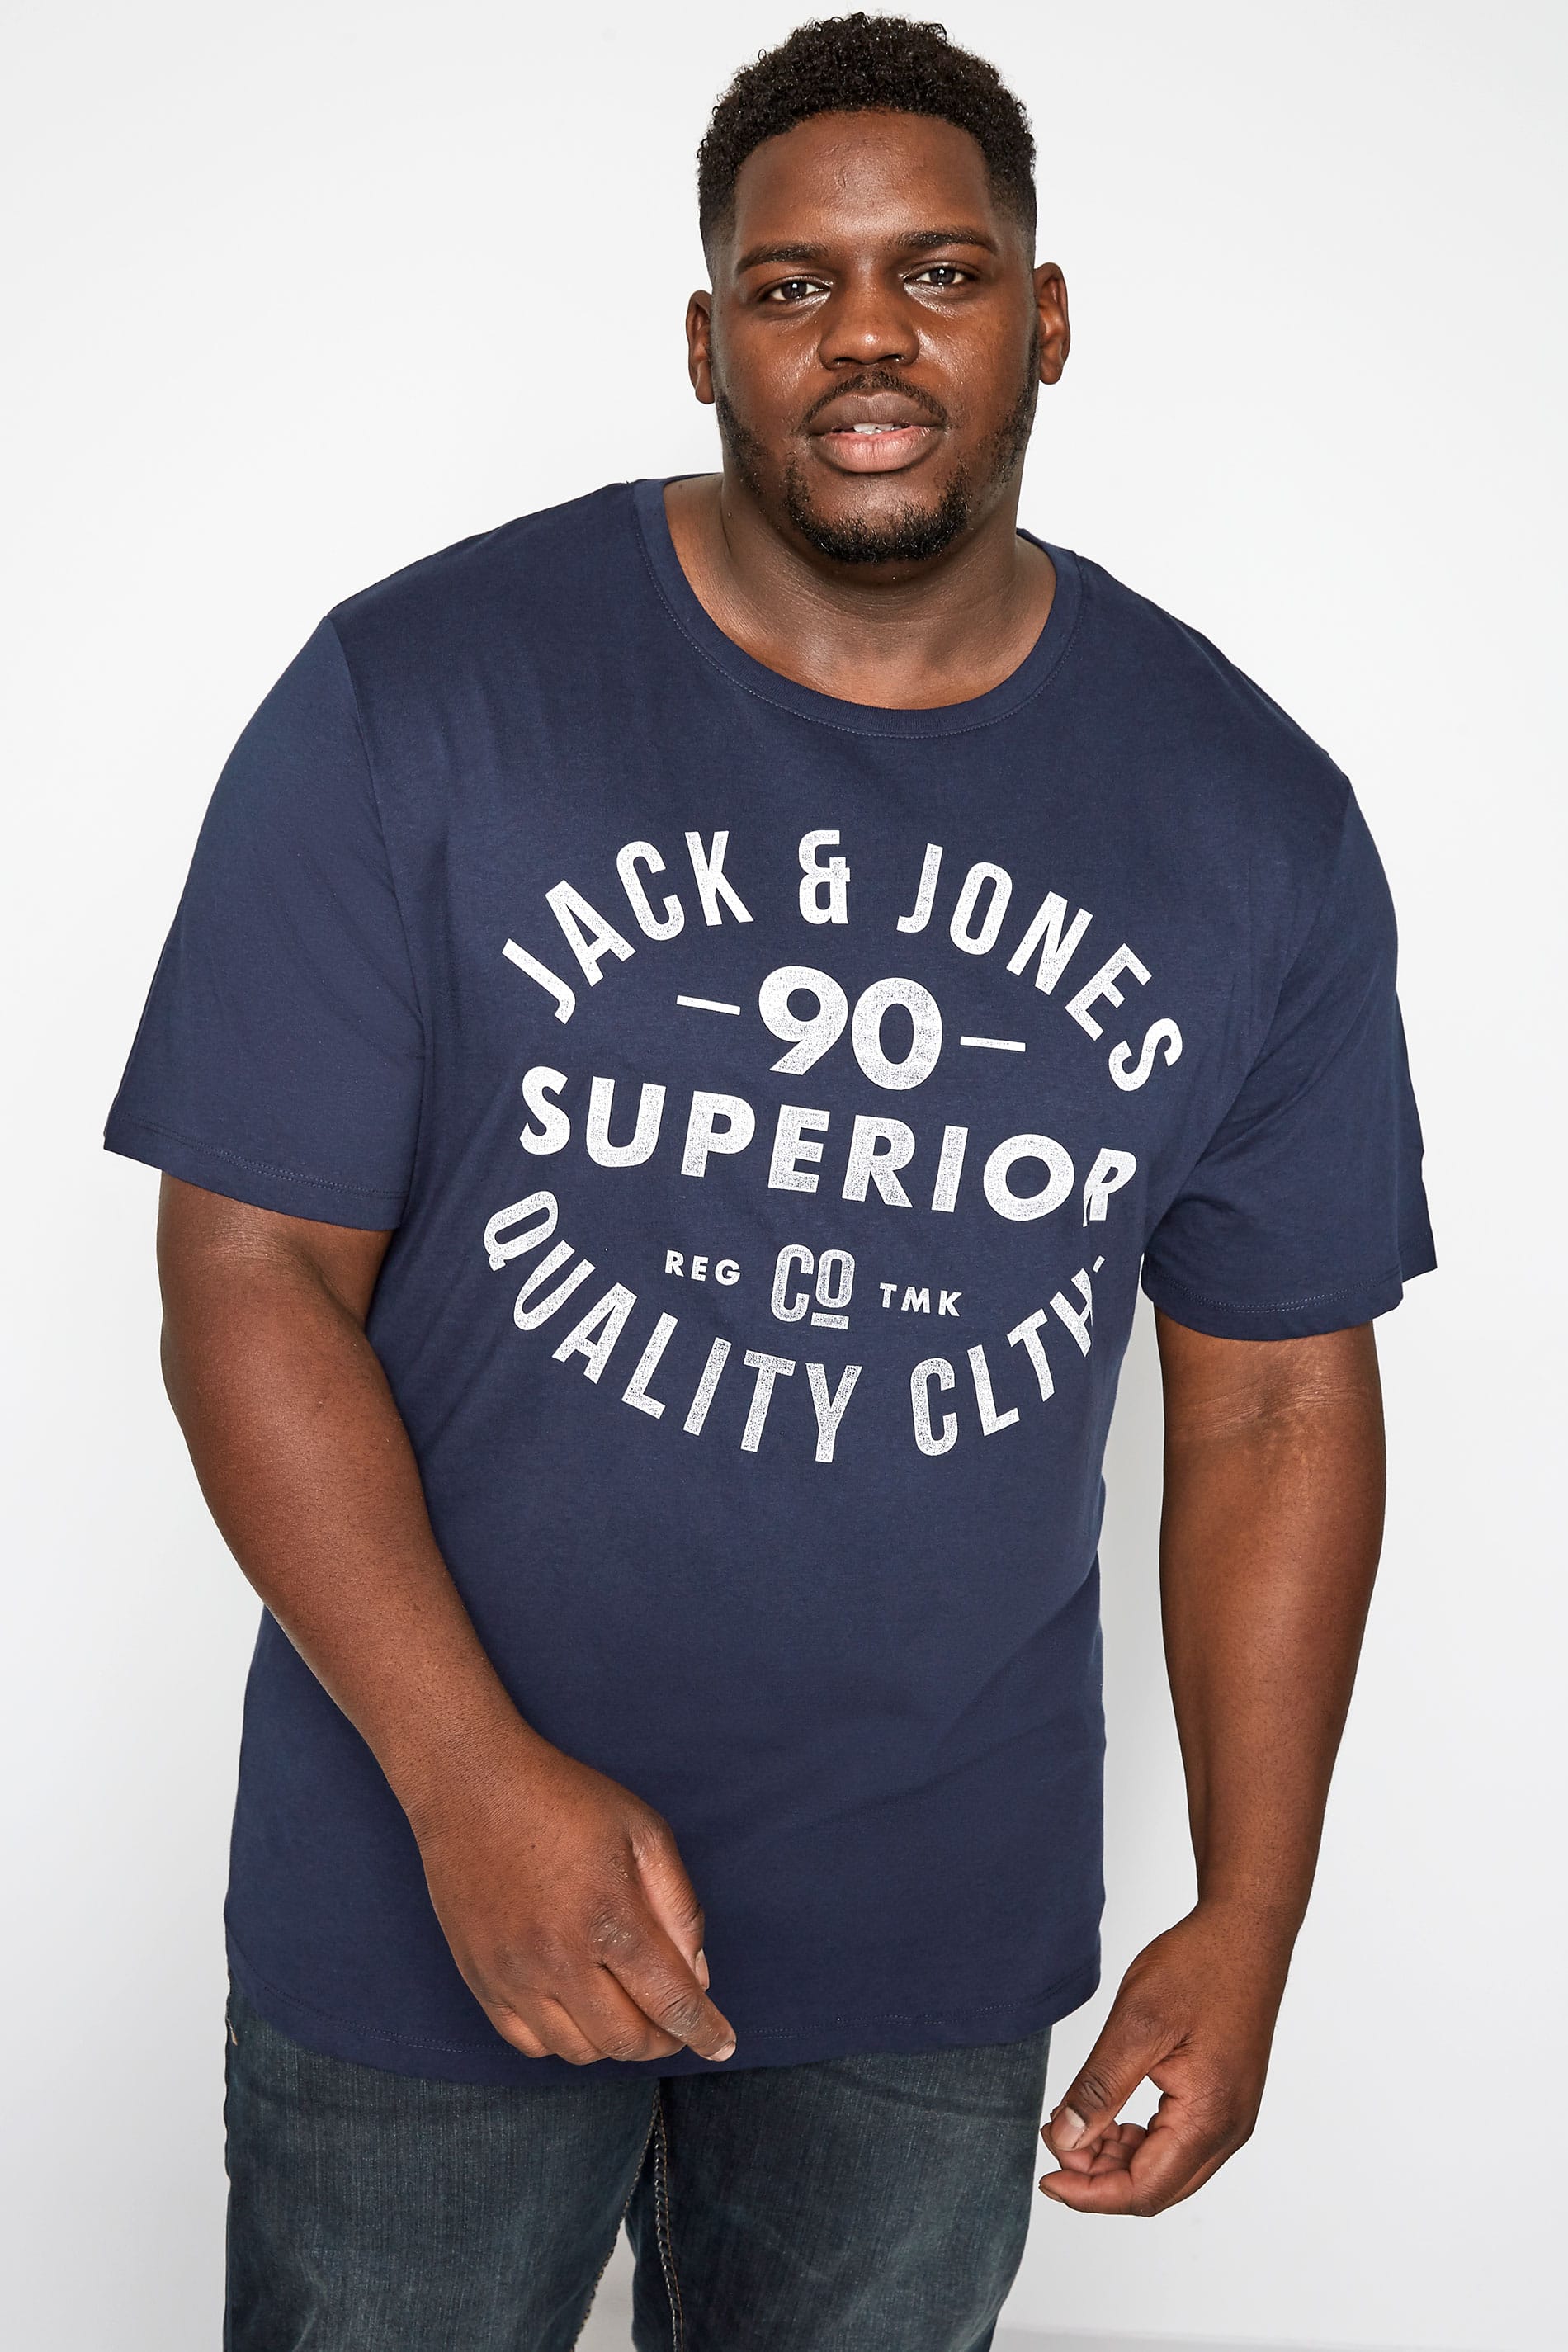 The usa jack and jones rebels t shirt vendors